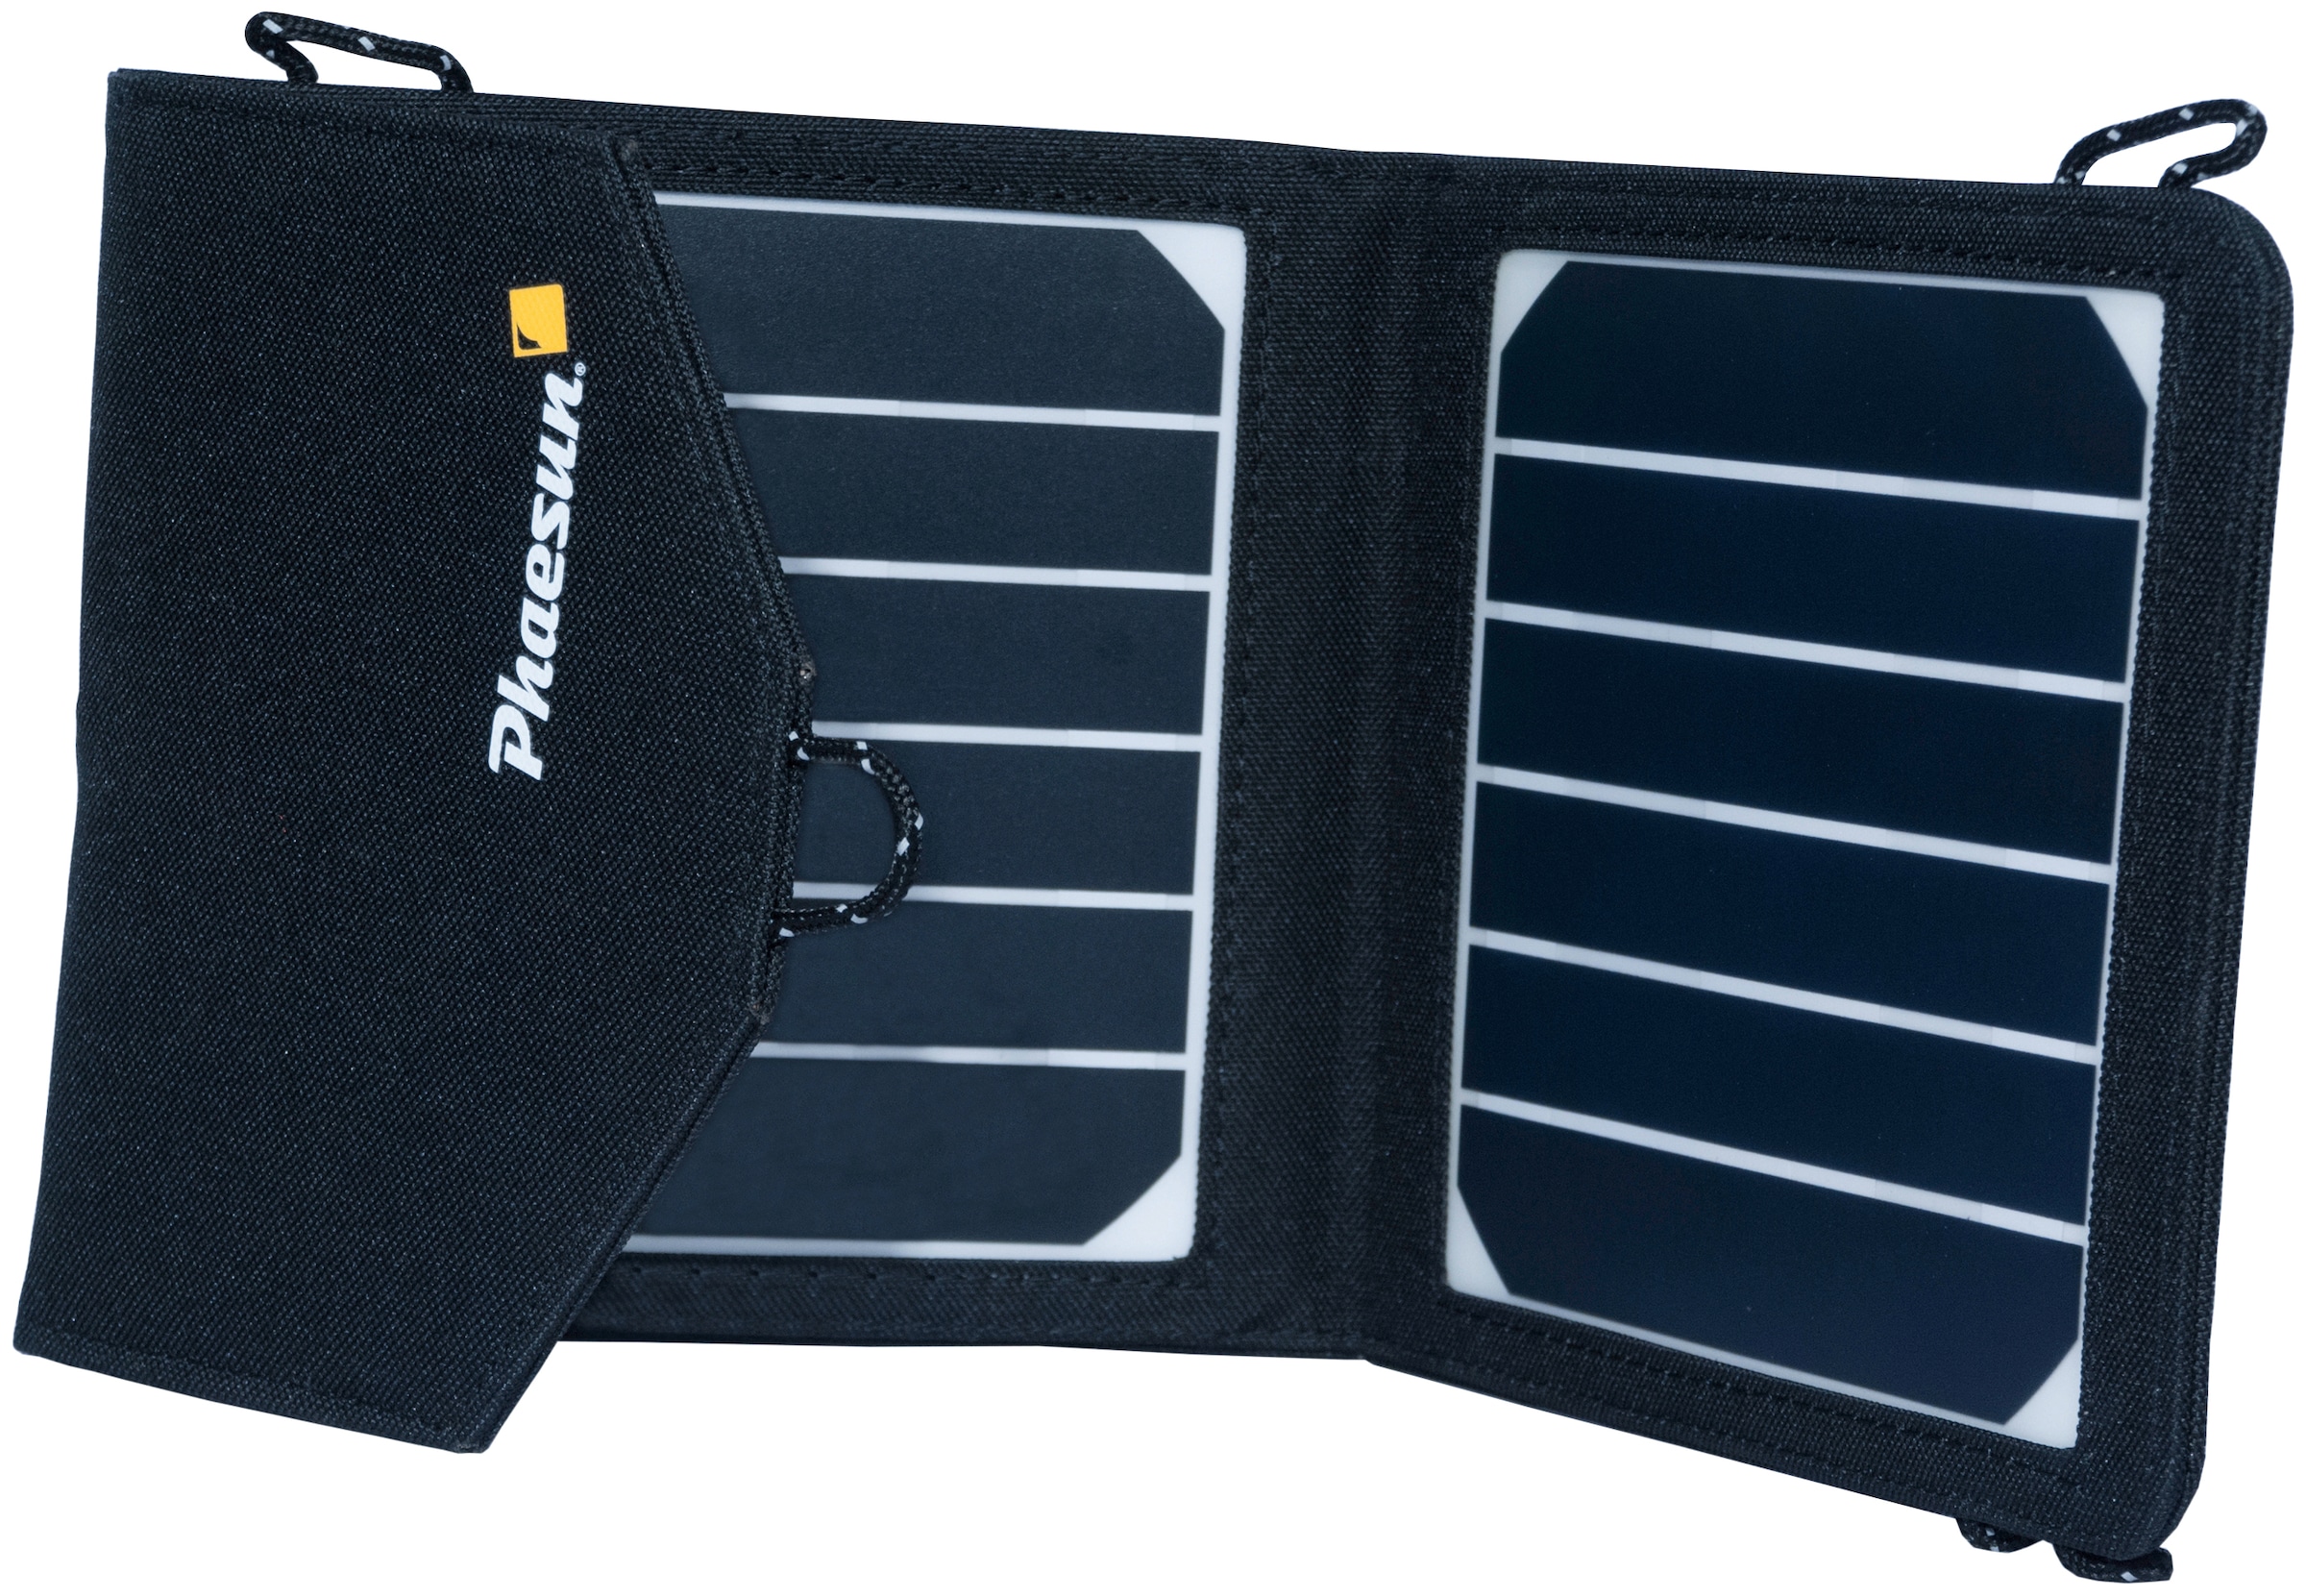 Solarladegerät »Trek King«, 1000 mA, 2x3,5 W, 5 VDC